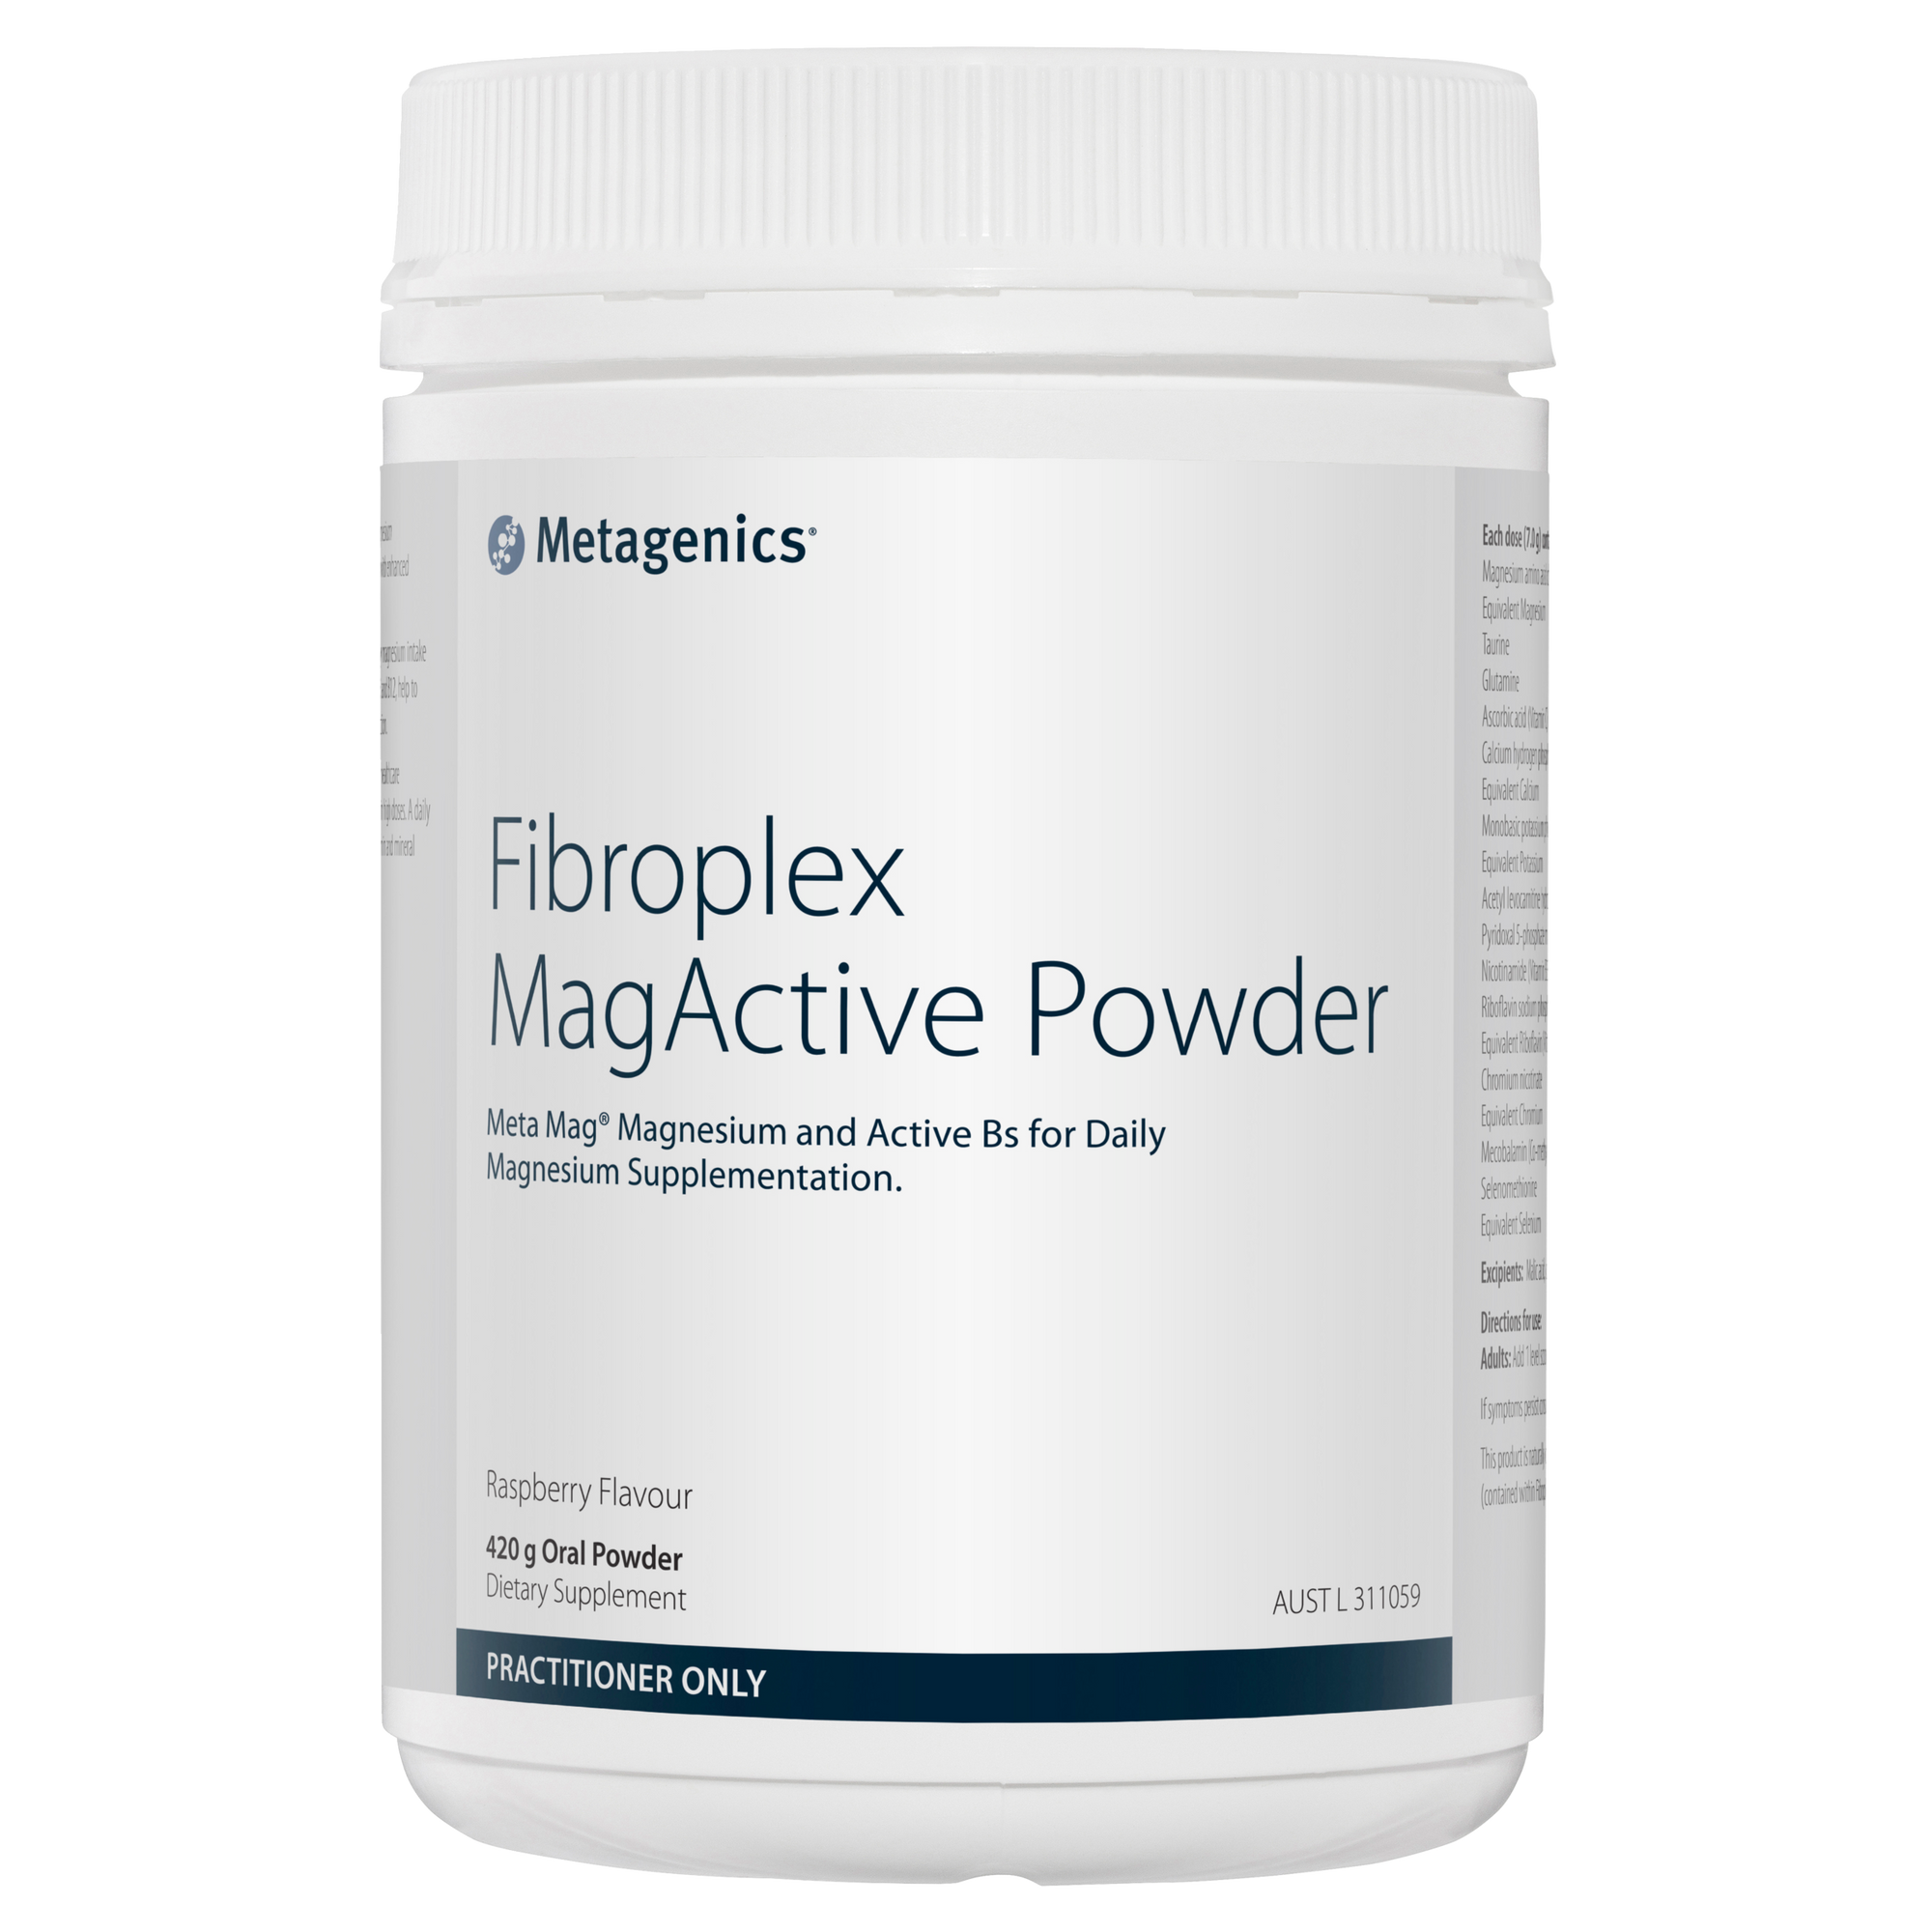 Metagenics Fibroplex MagActive Powder Oral Powder Raspberry Flavour